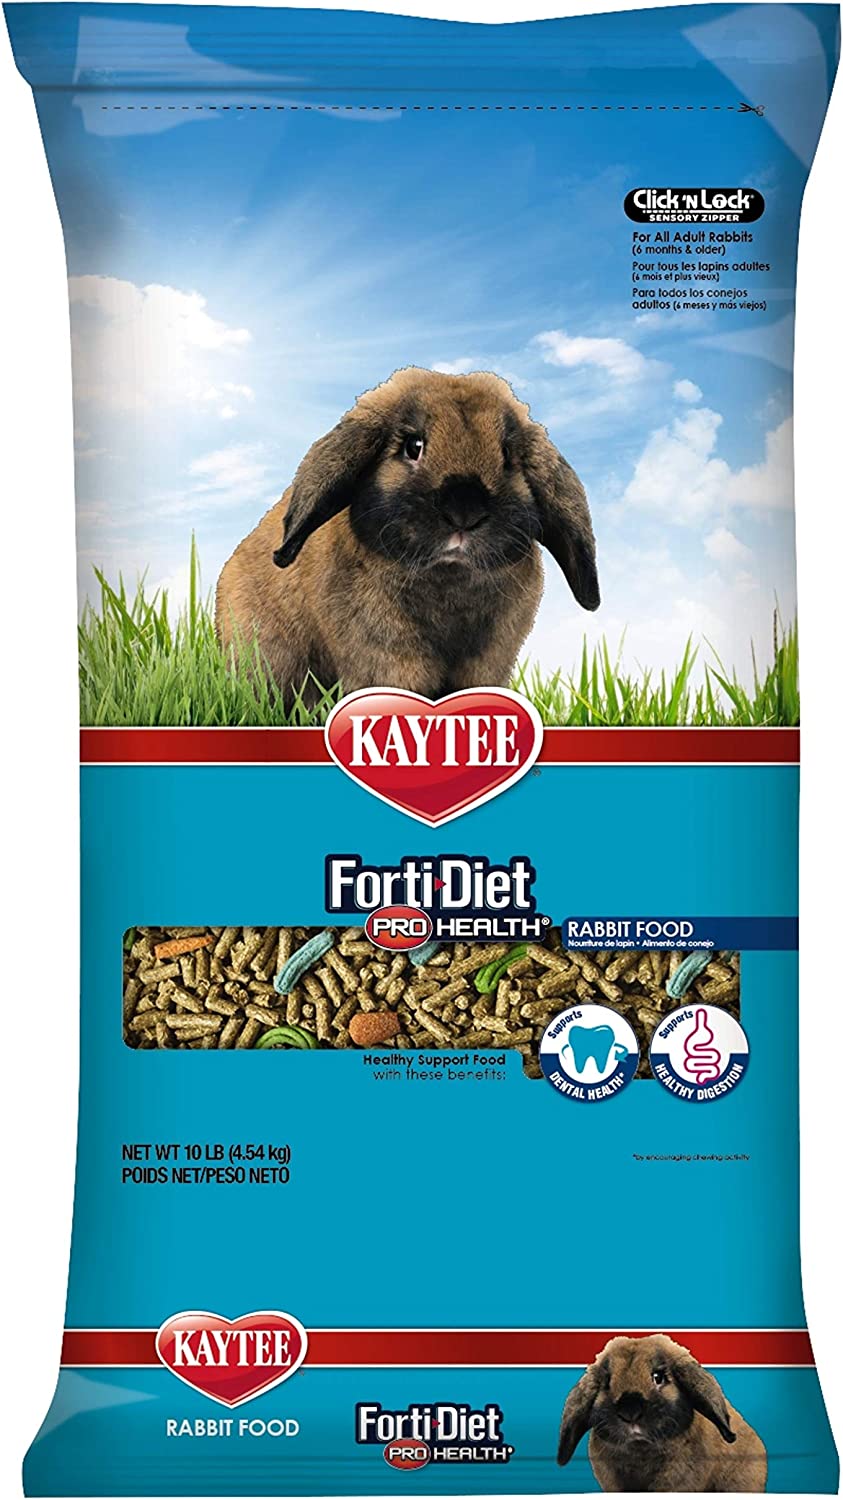 Kaytee Forti-Diet Pro Health Adult Pet Rabbit Food, 10 Pound Bag